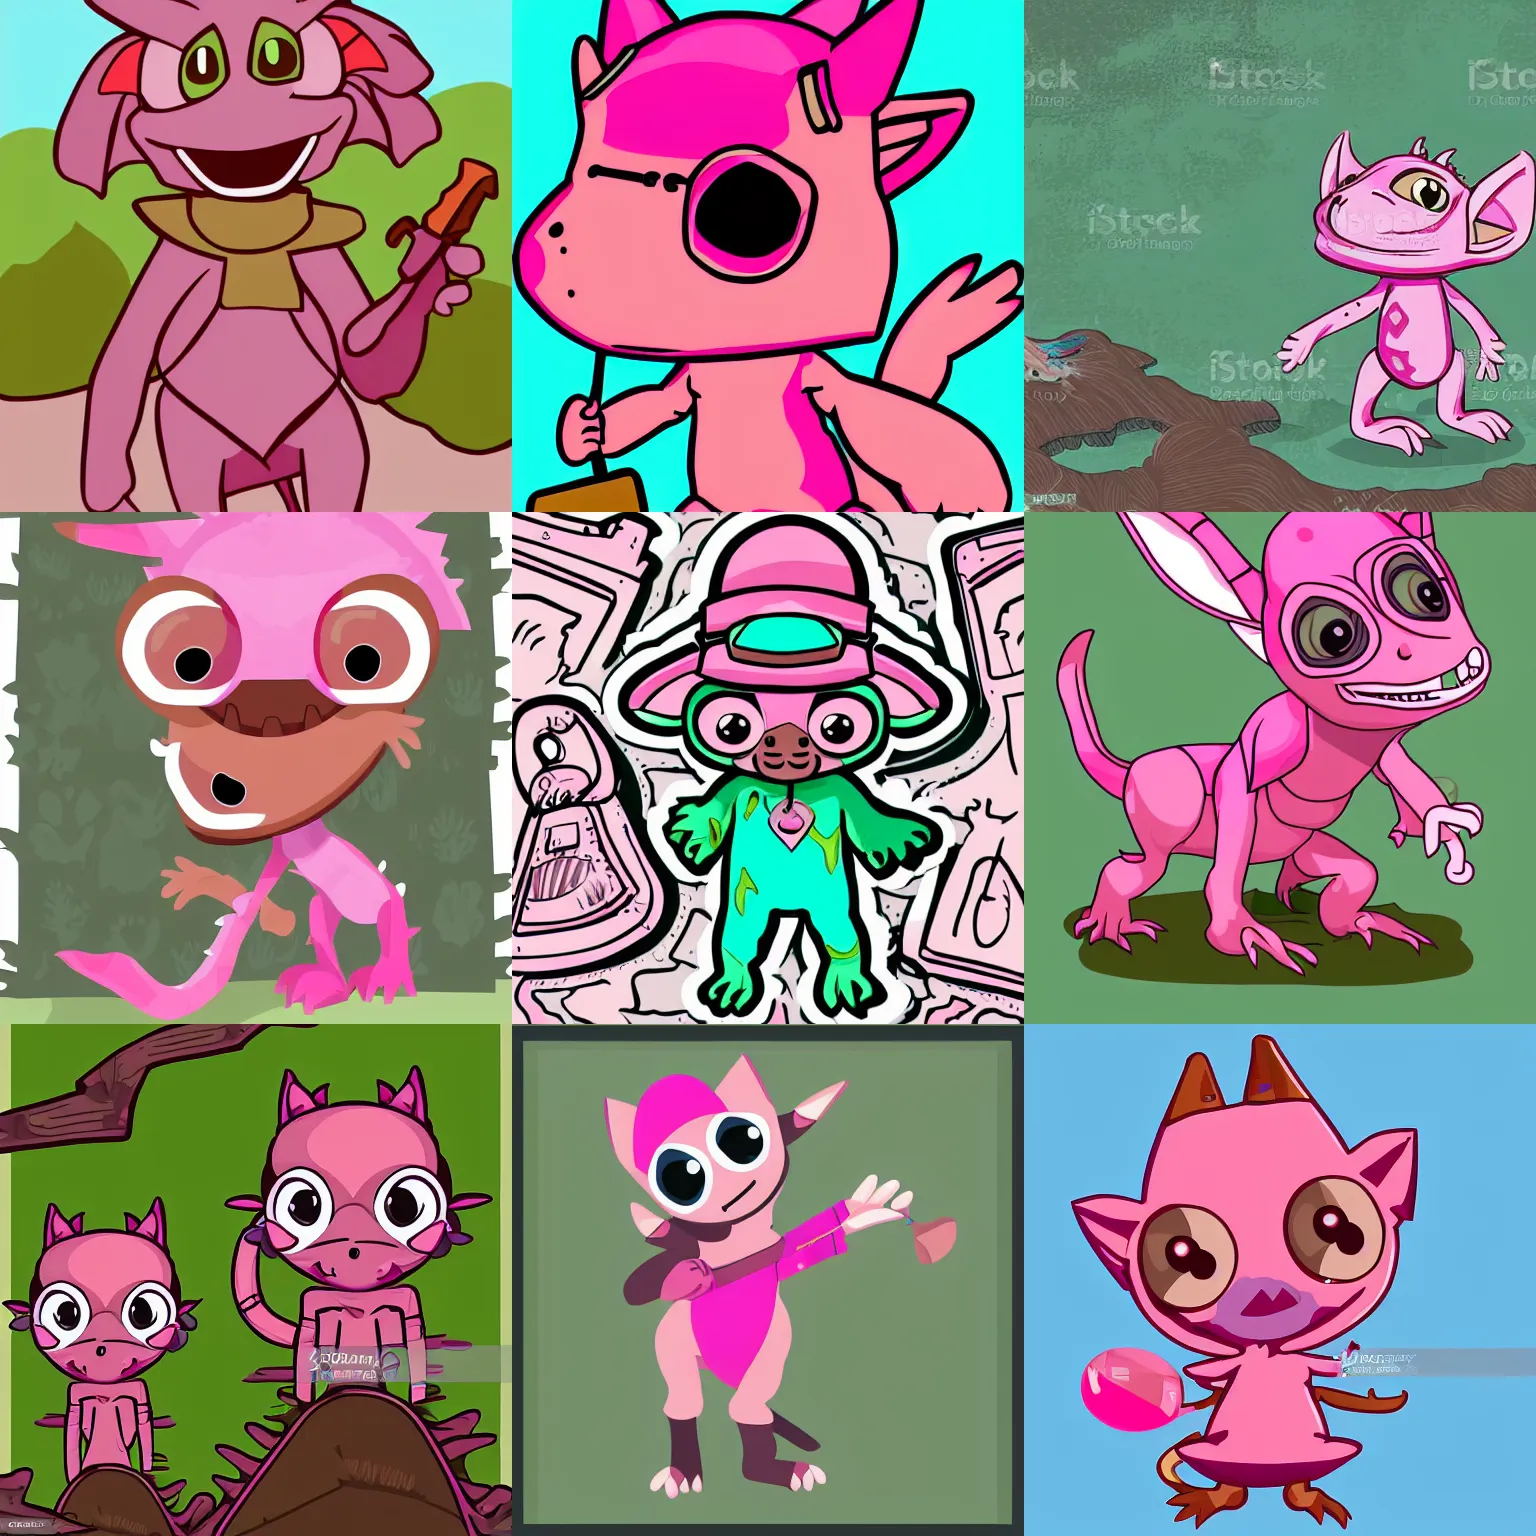 Prompt: A cute vector art of a cute pink Kobold dressed as a explorer